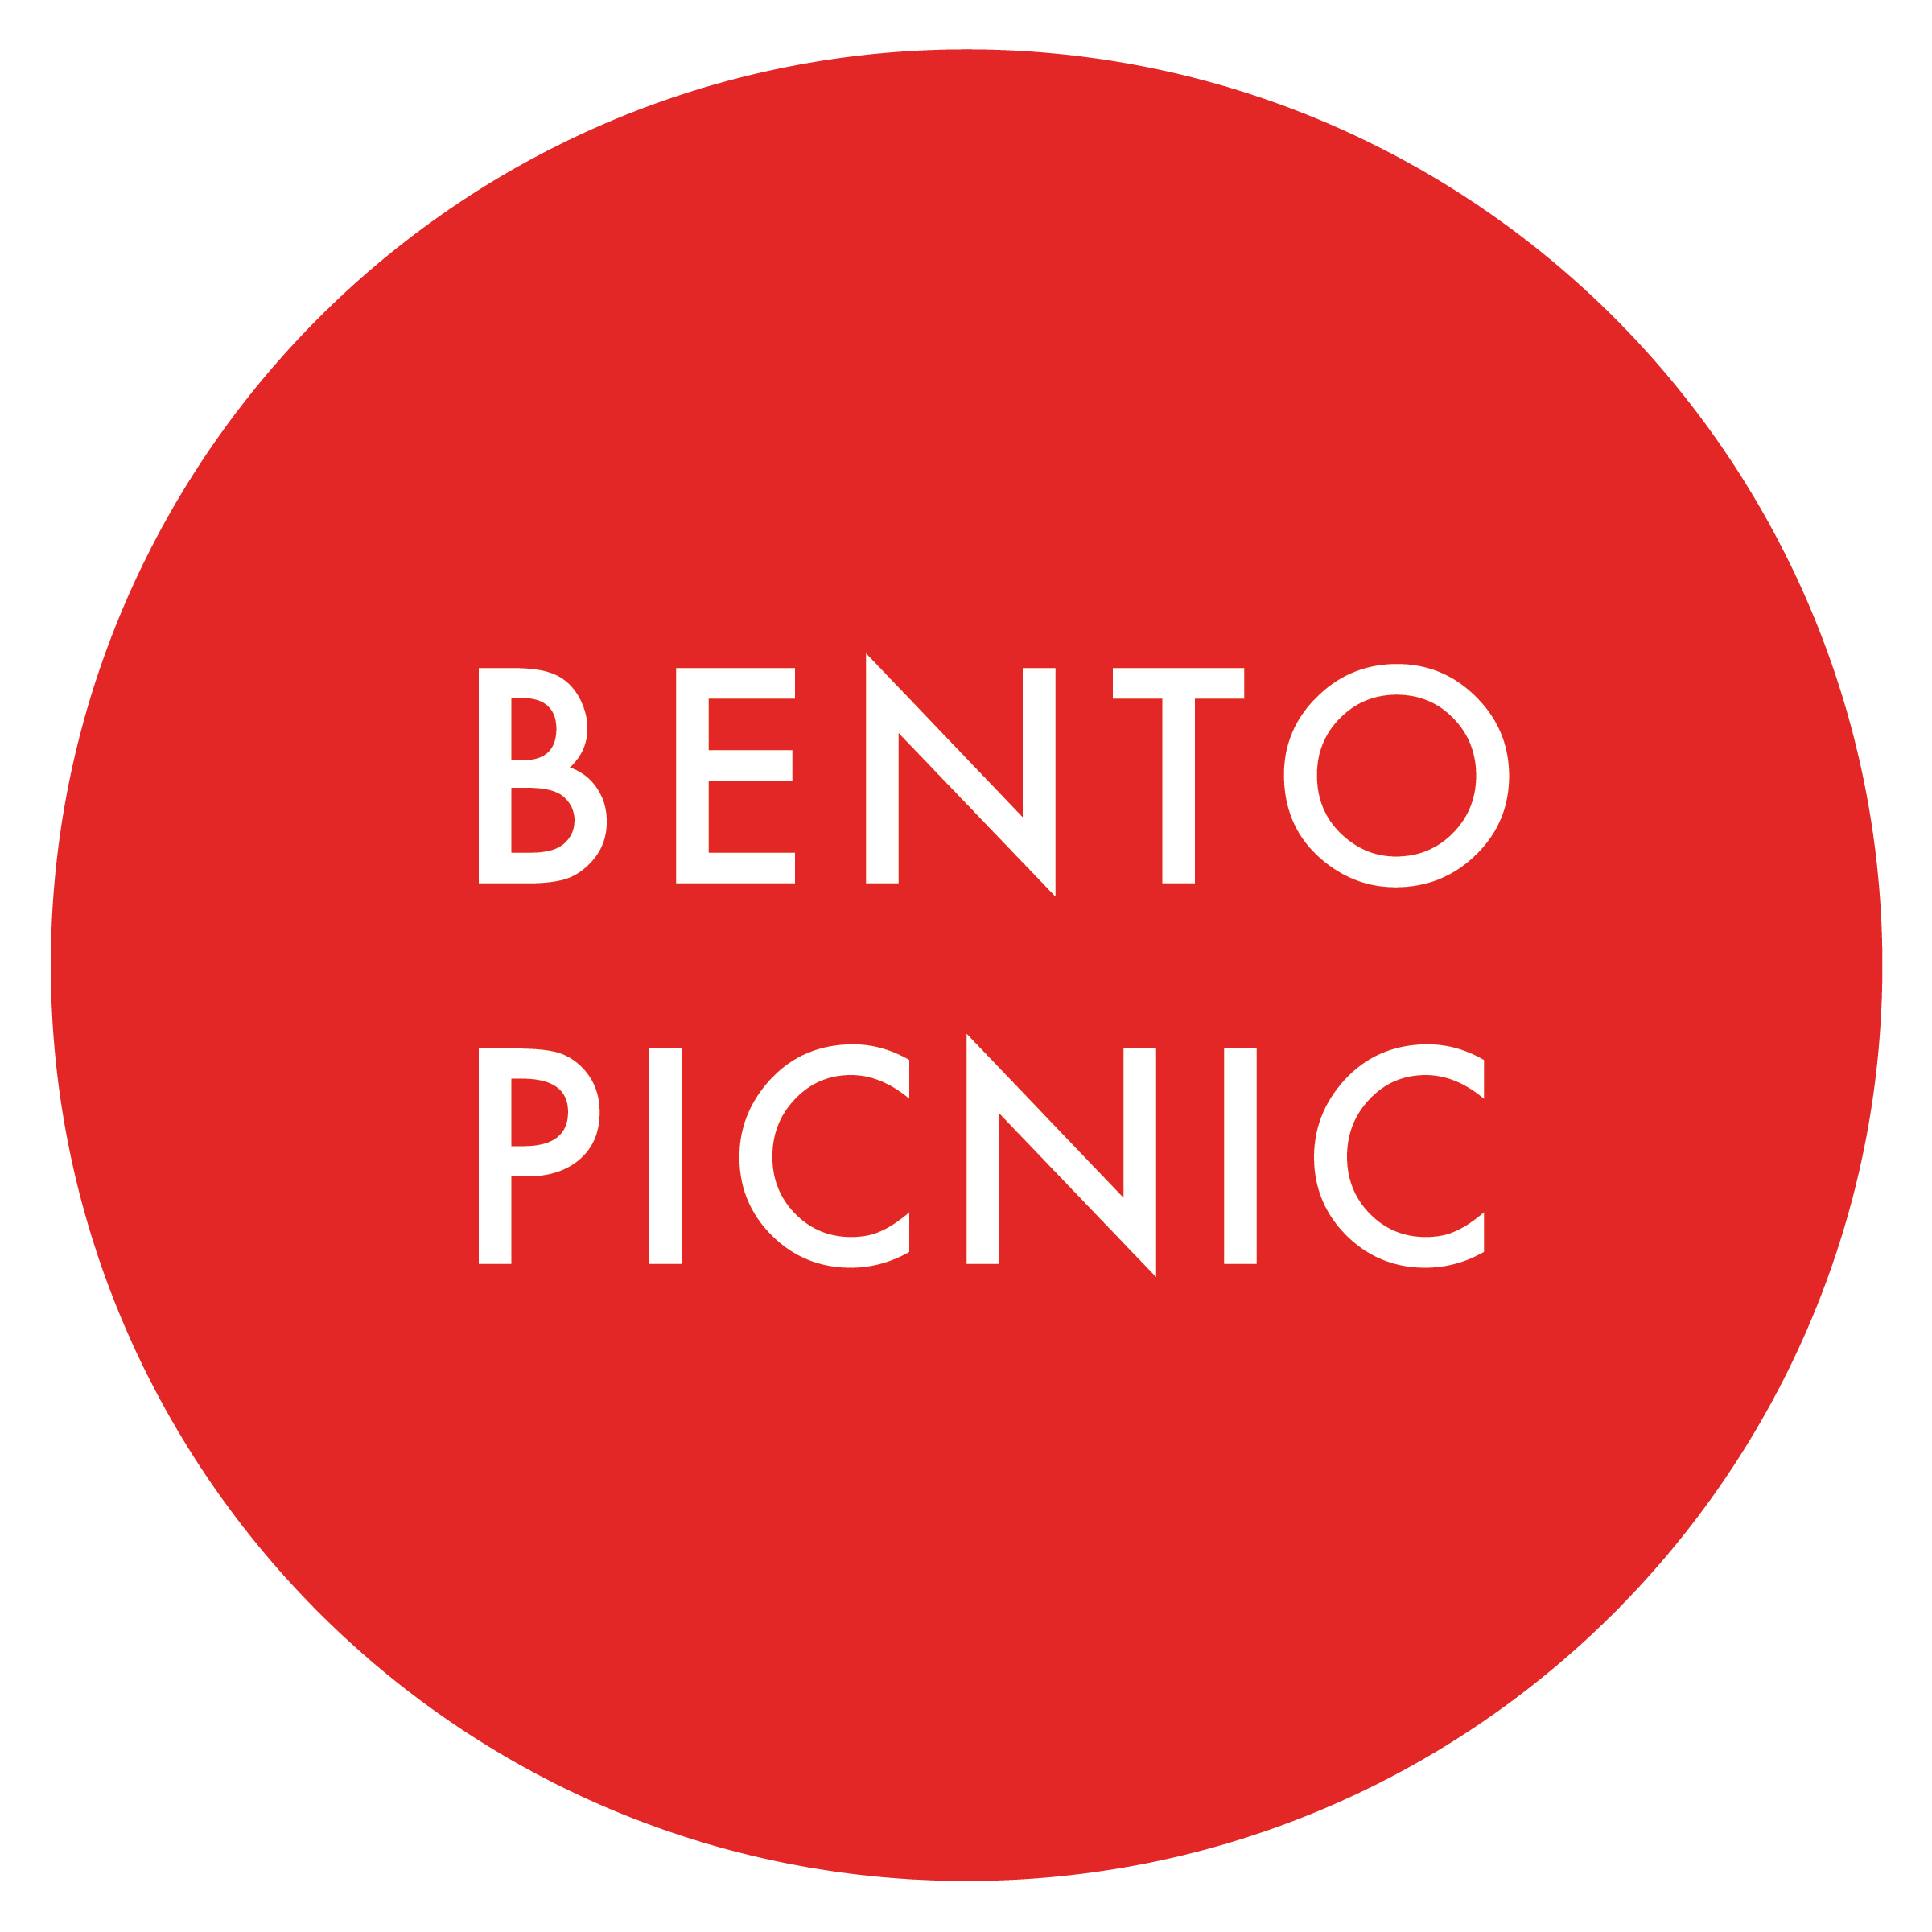 Бенто логотип. Бенто лого. Bento logo. Let's lunch